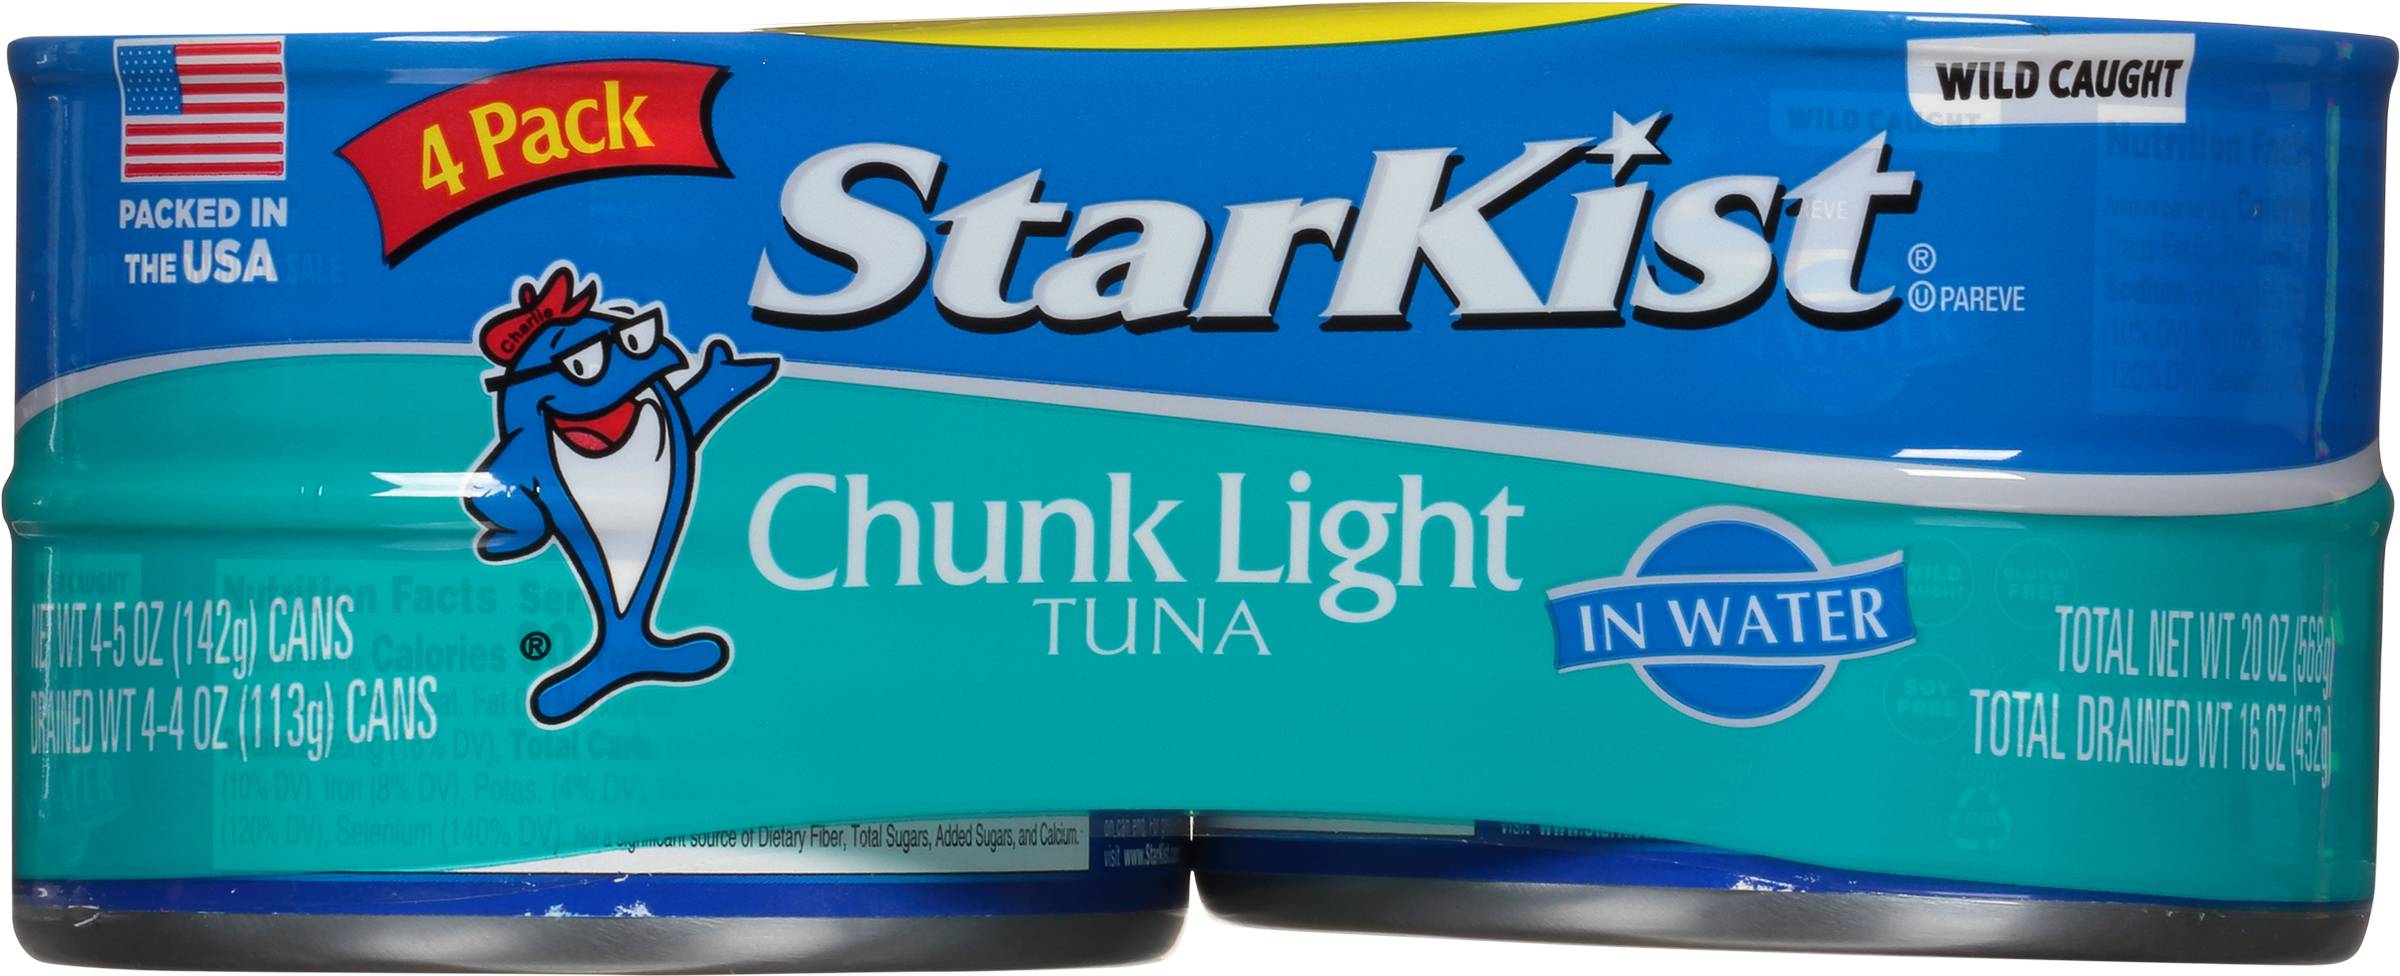 Starkist Wild Caught Chunk Light Tuna in Water (4 ct)